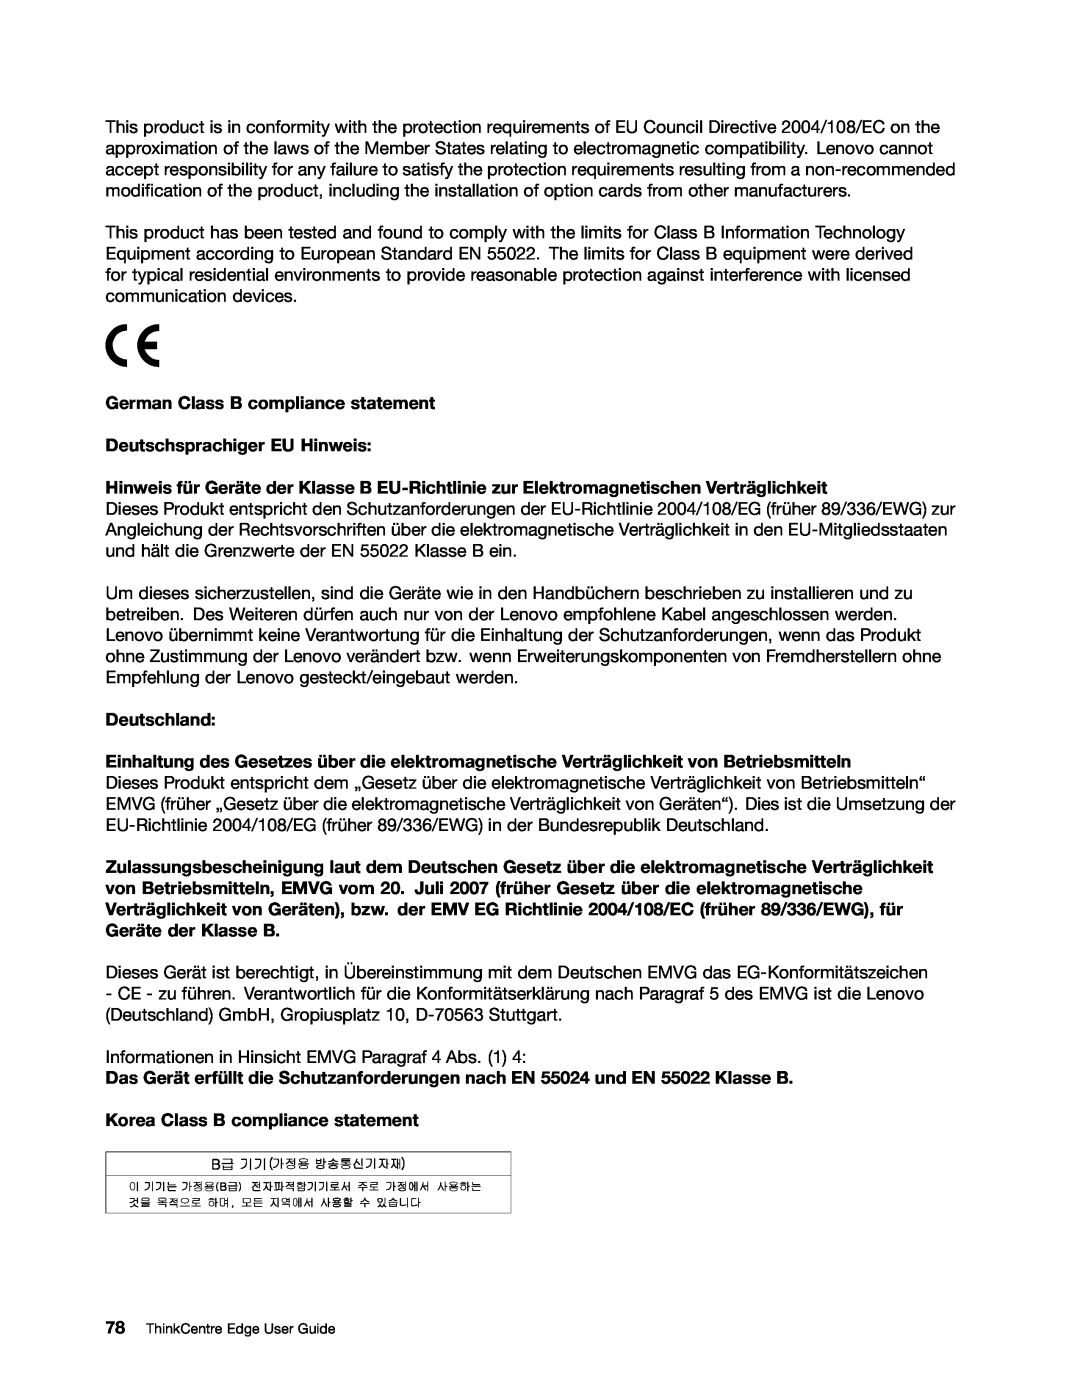 Lenovo 2117EKU manual German Class B compliance statement Deutschsprachiger EU Hinweis, Deutschland 